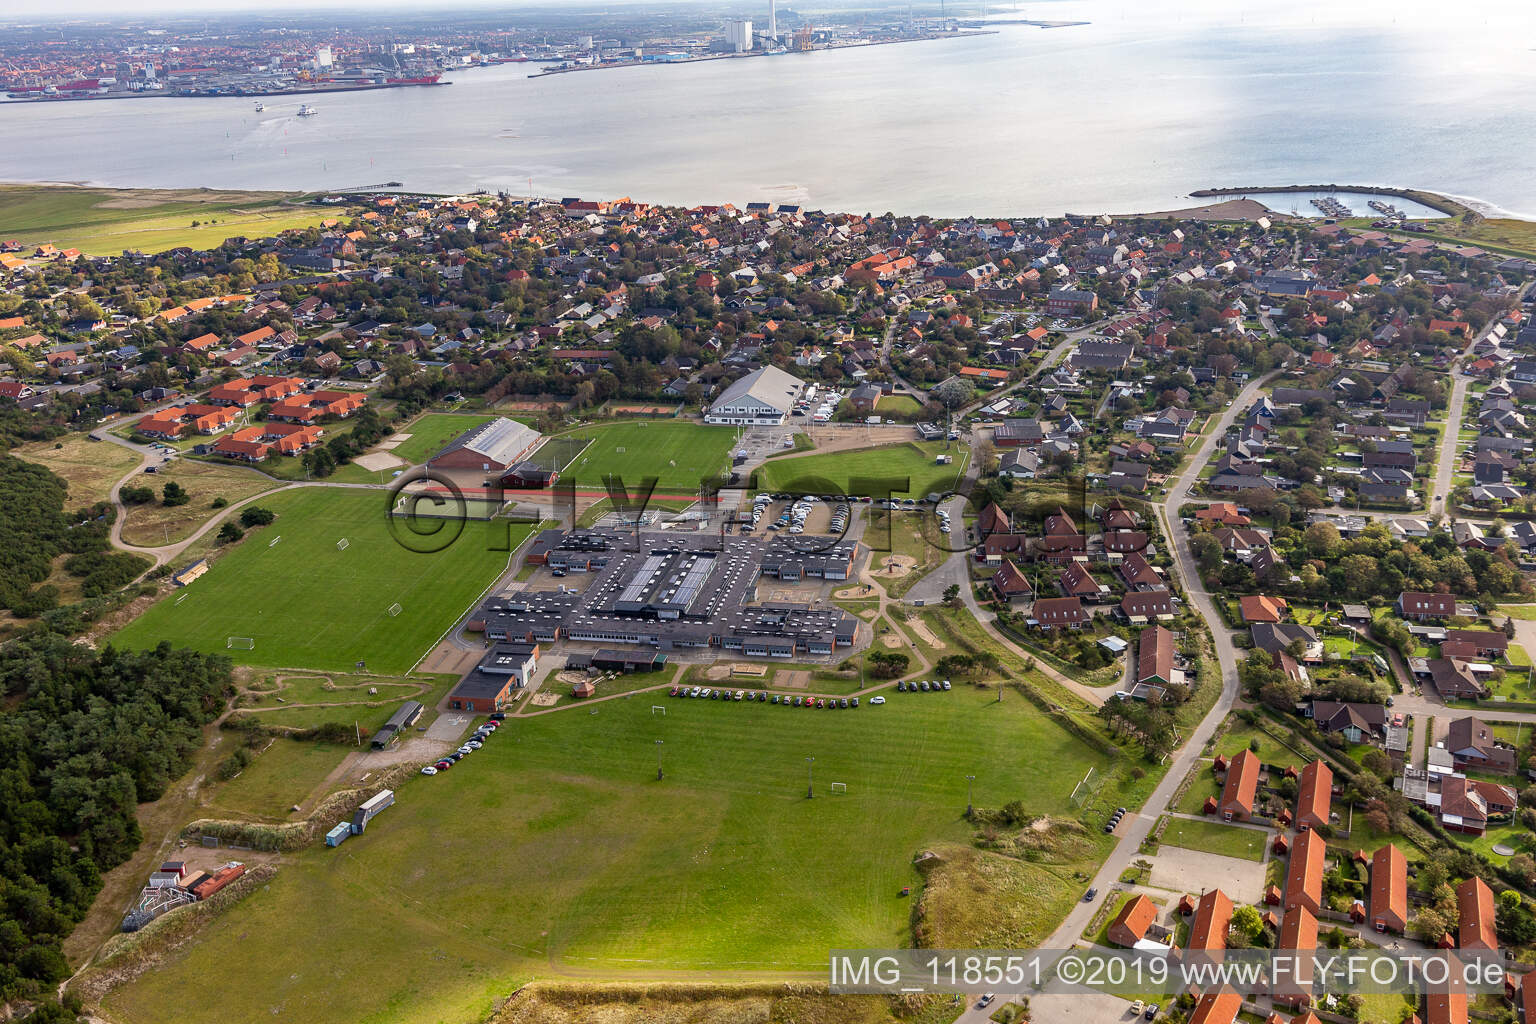 Luftbild von Fanø Skole og bibliotek in Nordby im Bundesland Syddanmark, Dänemark